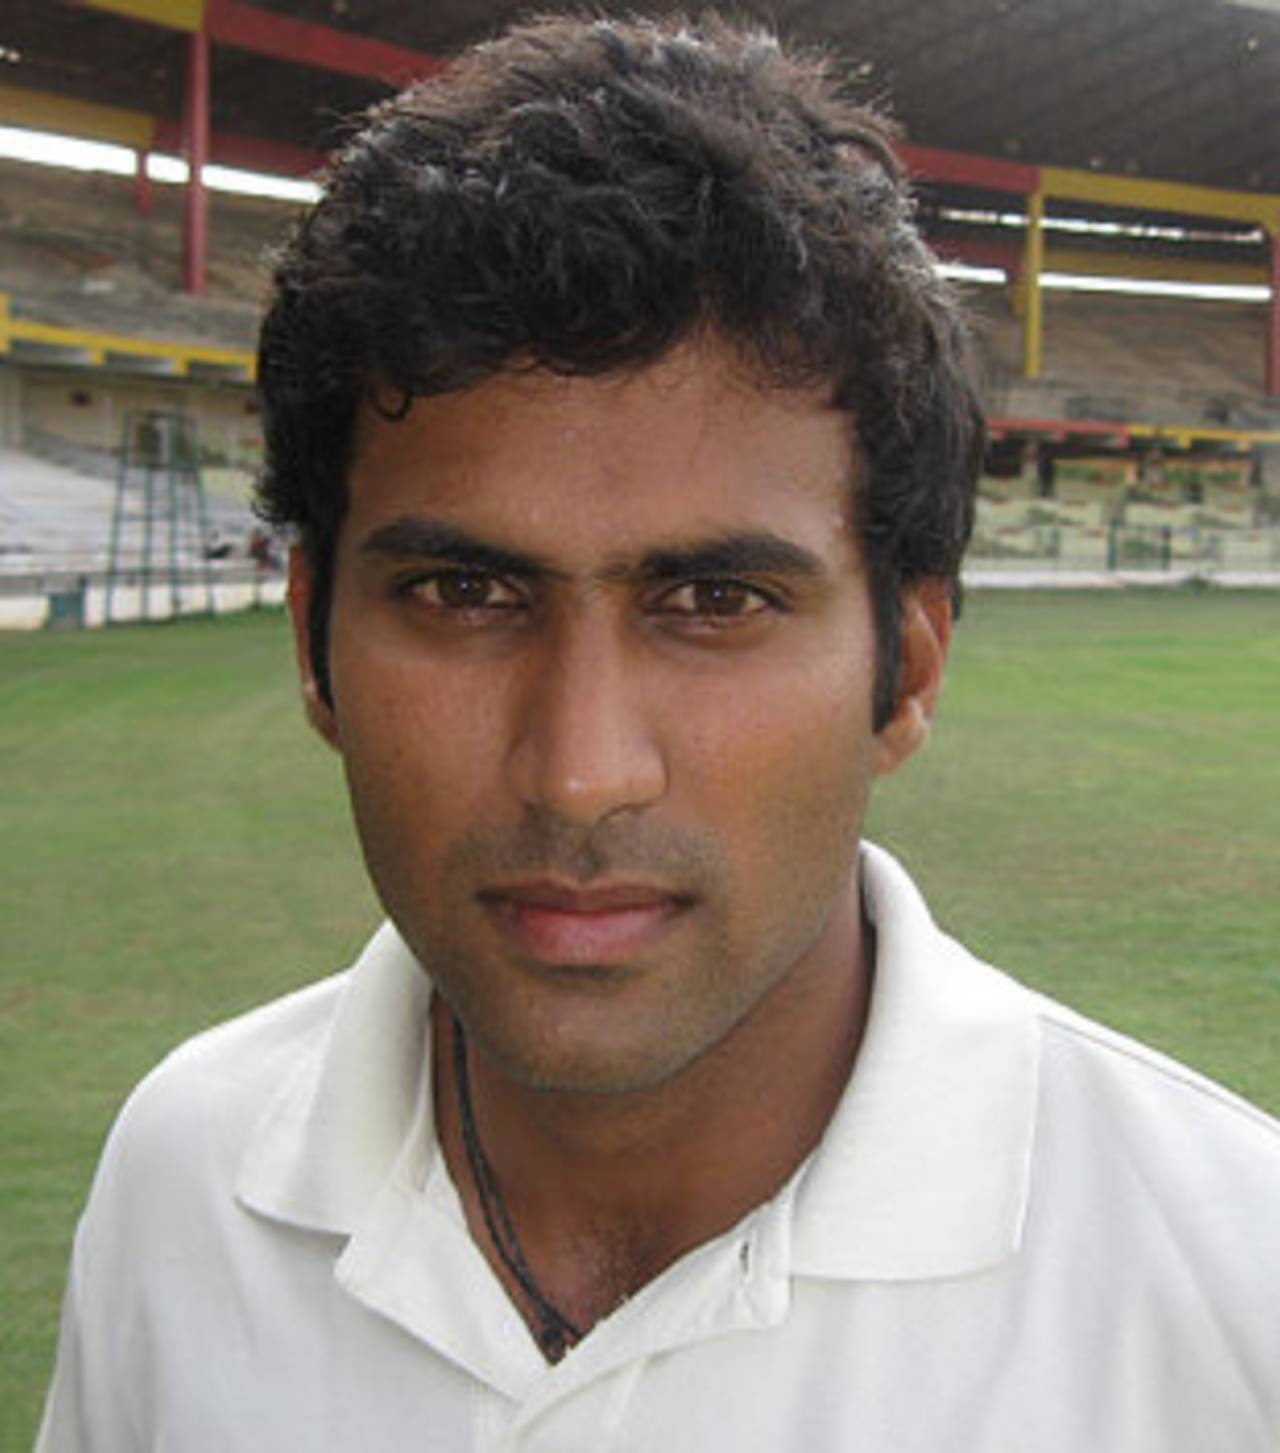 Udit Patel, player portrait, July 2009